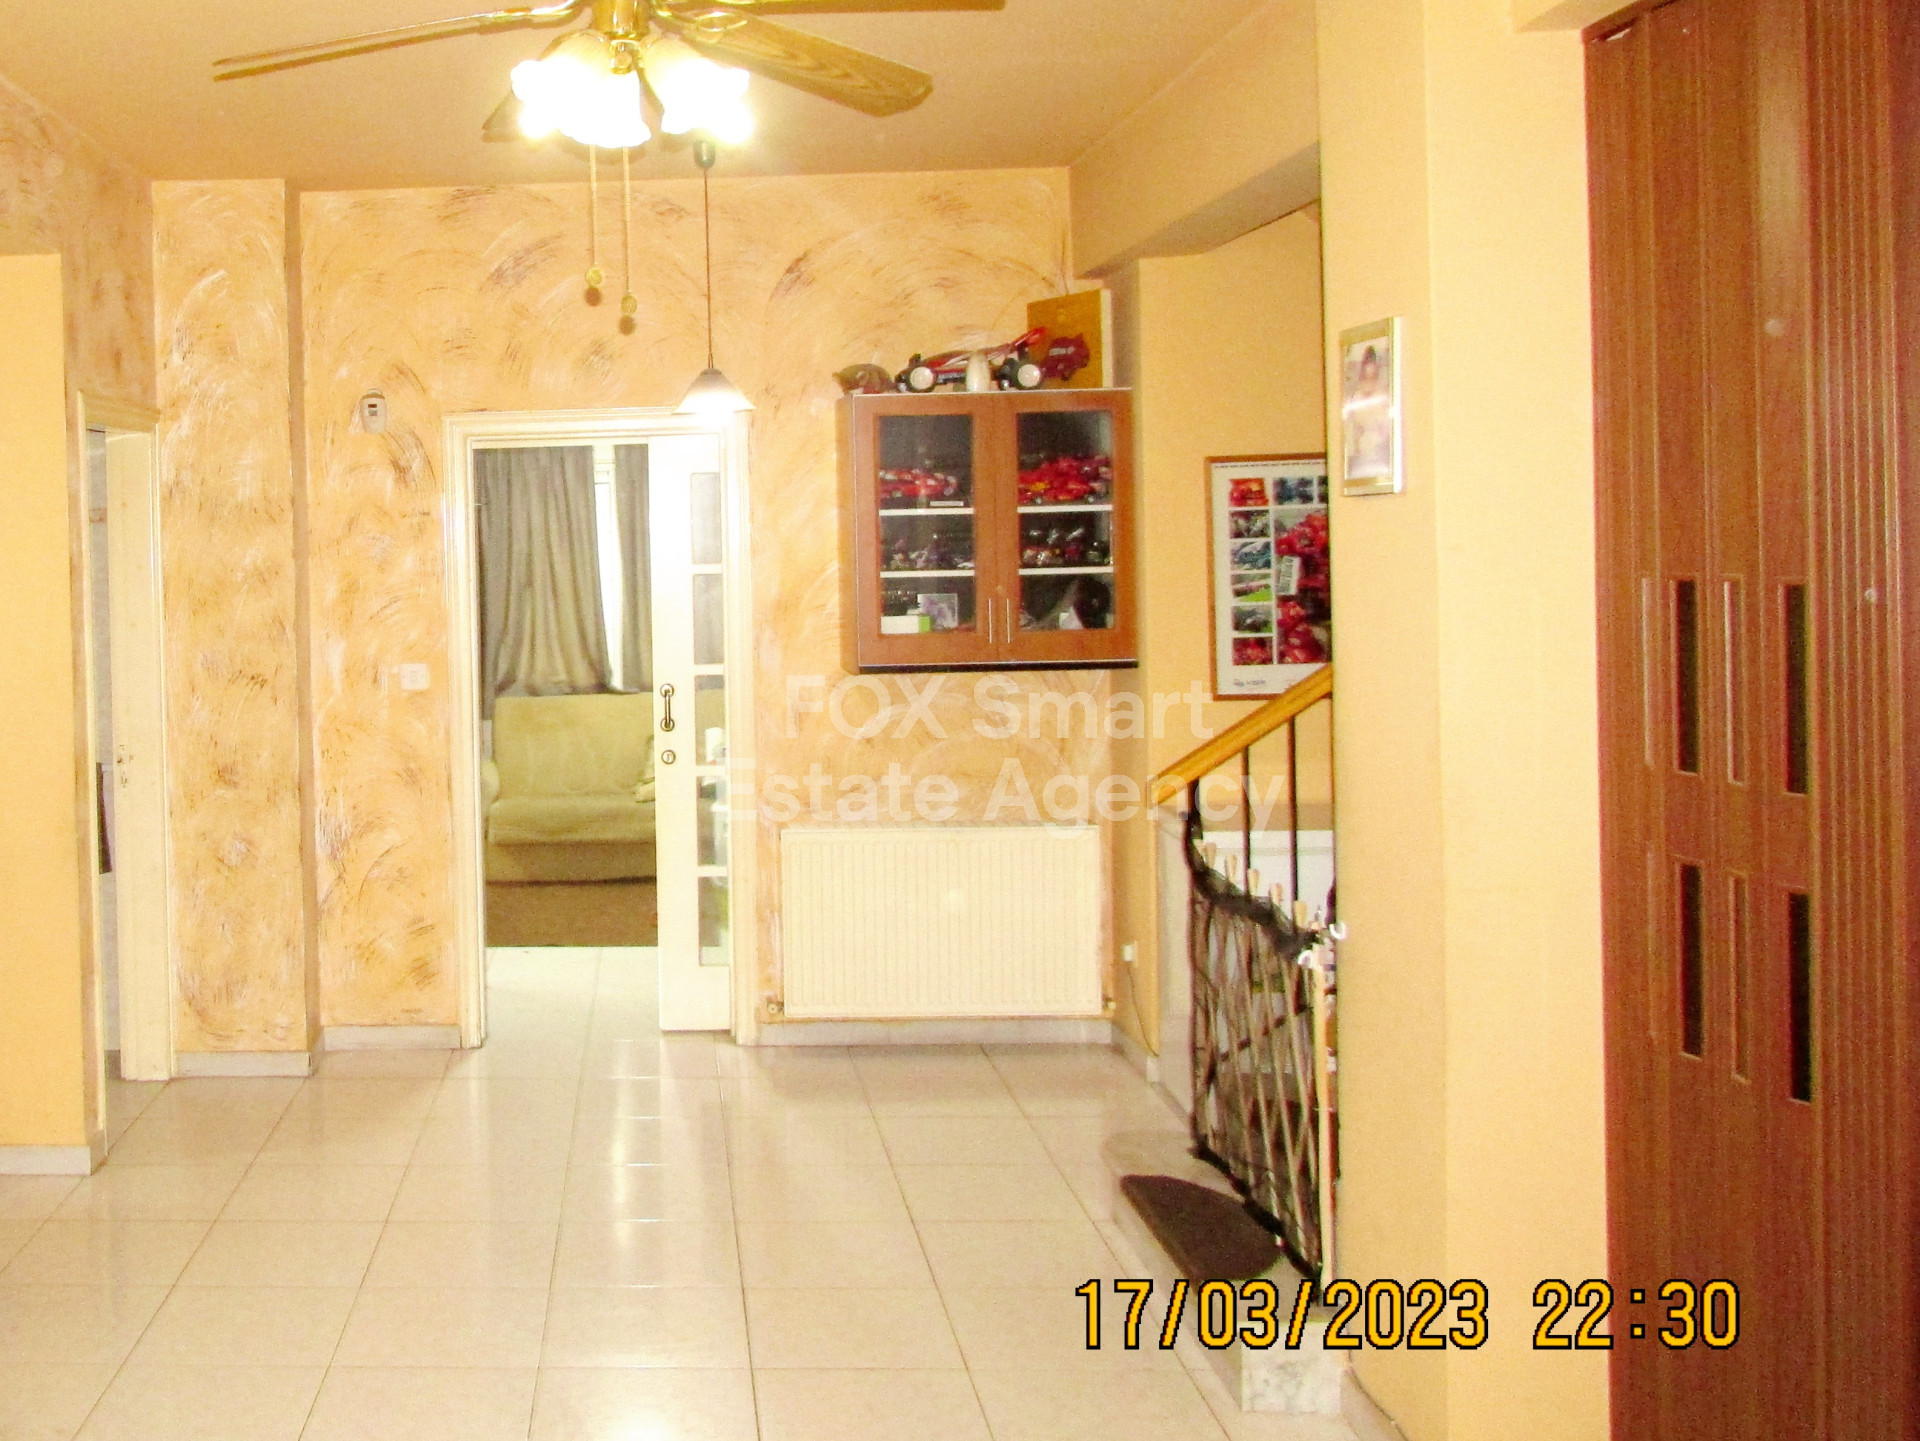 Apartment, For Sale, Nicosia, Aglantzia  3 Bedrooms 2 Bathro.....